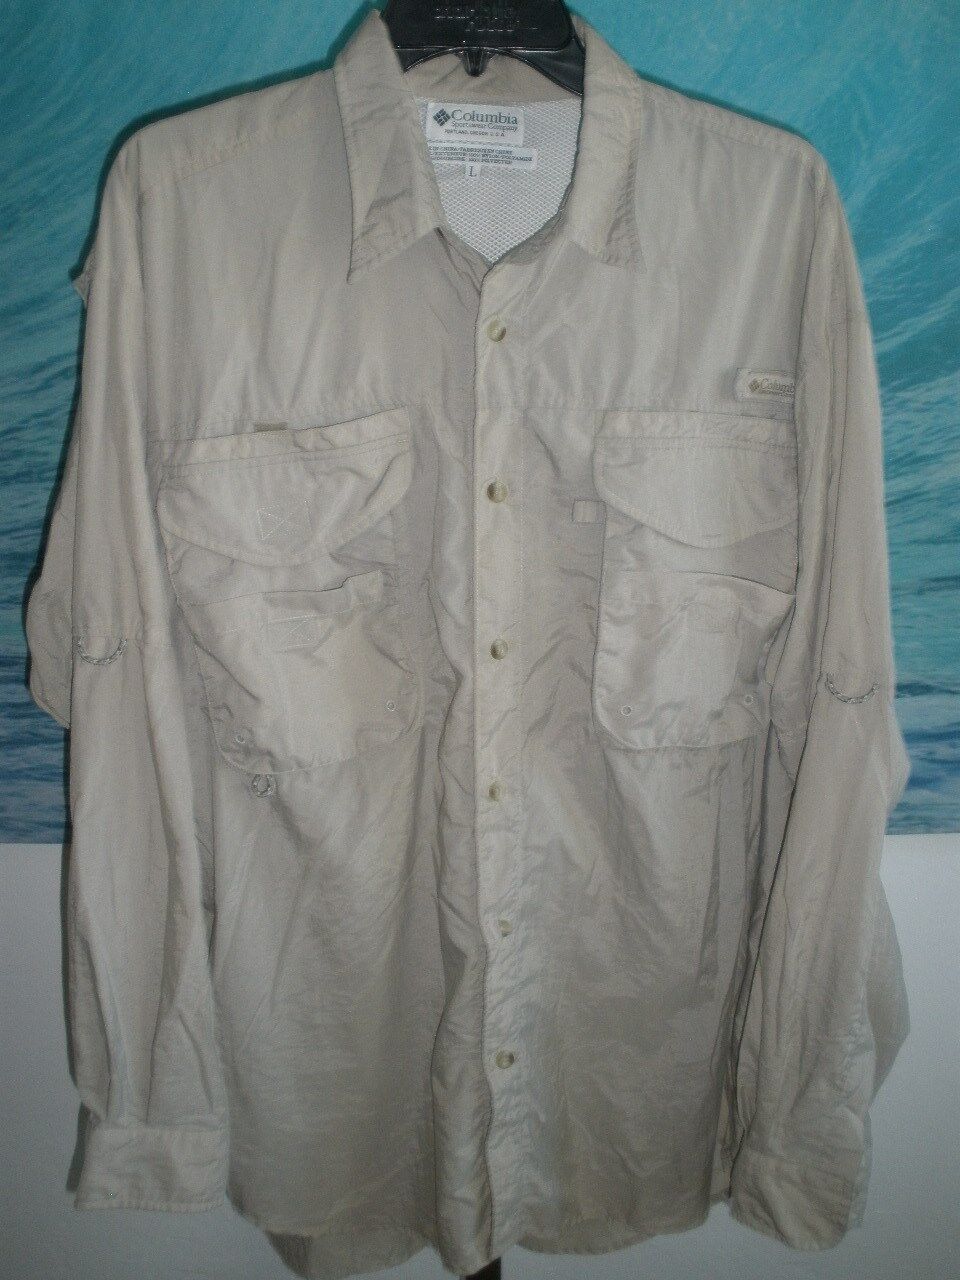 Primary image for Men's Columbia Sportswear PFG Long Sleeve Vented Fishing/Hiking Shirt Sz XL